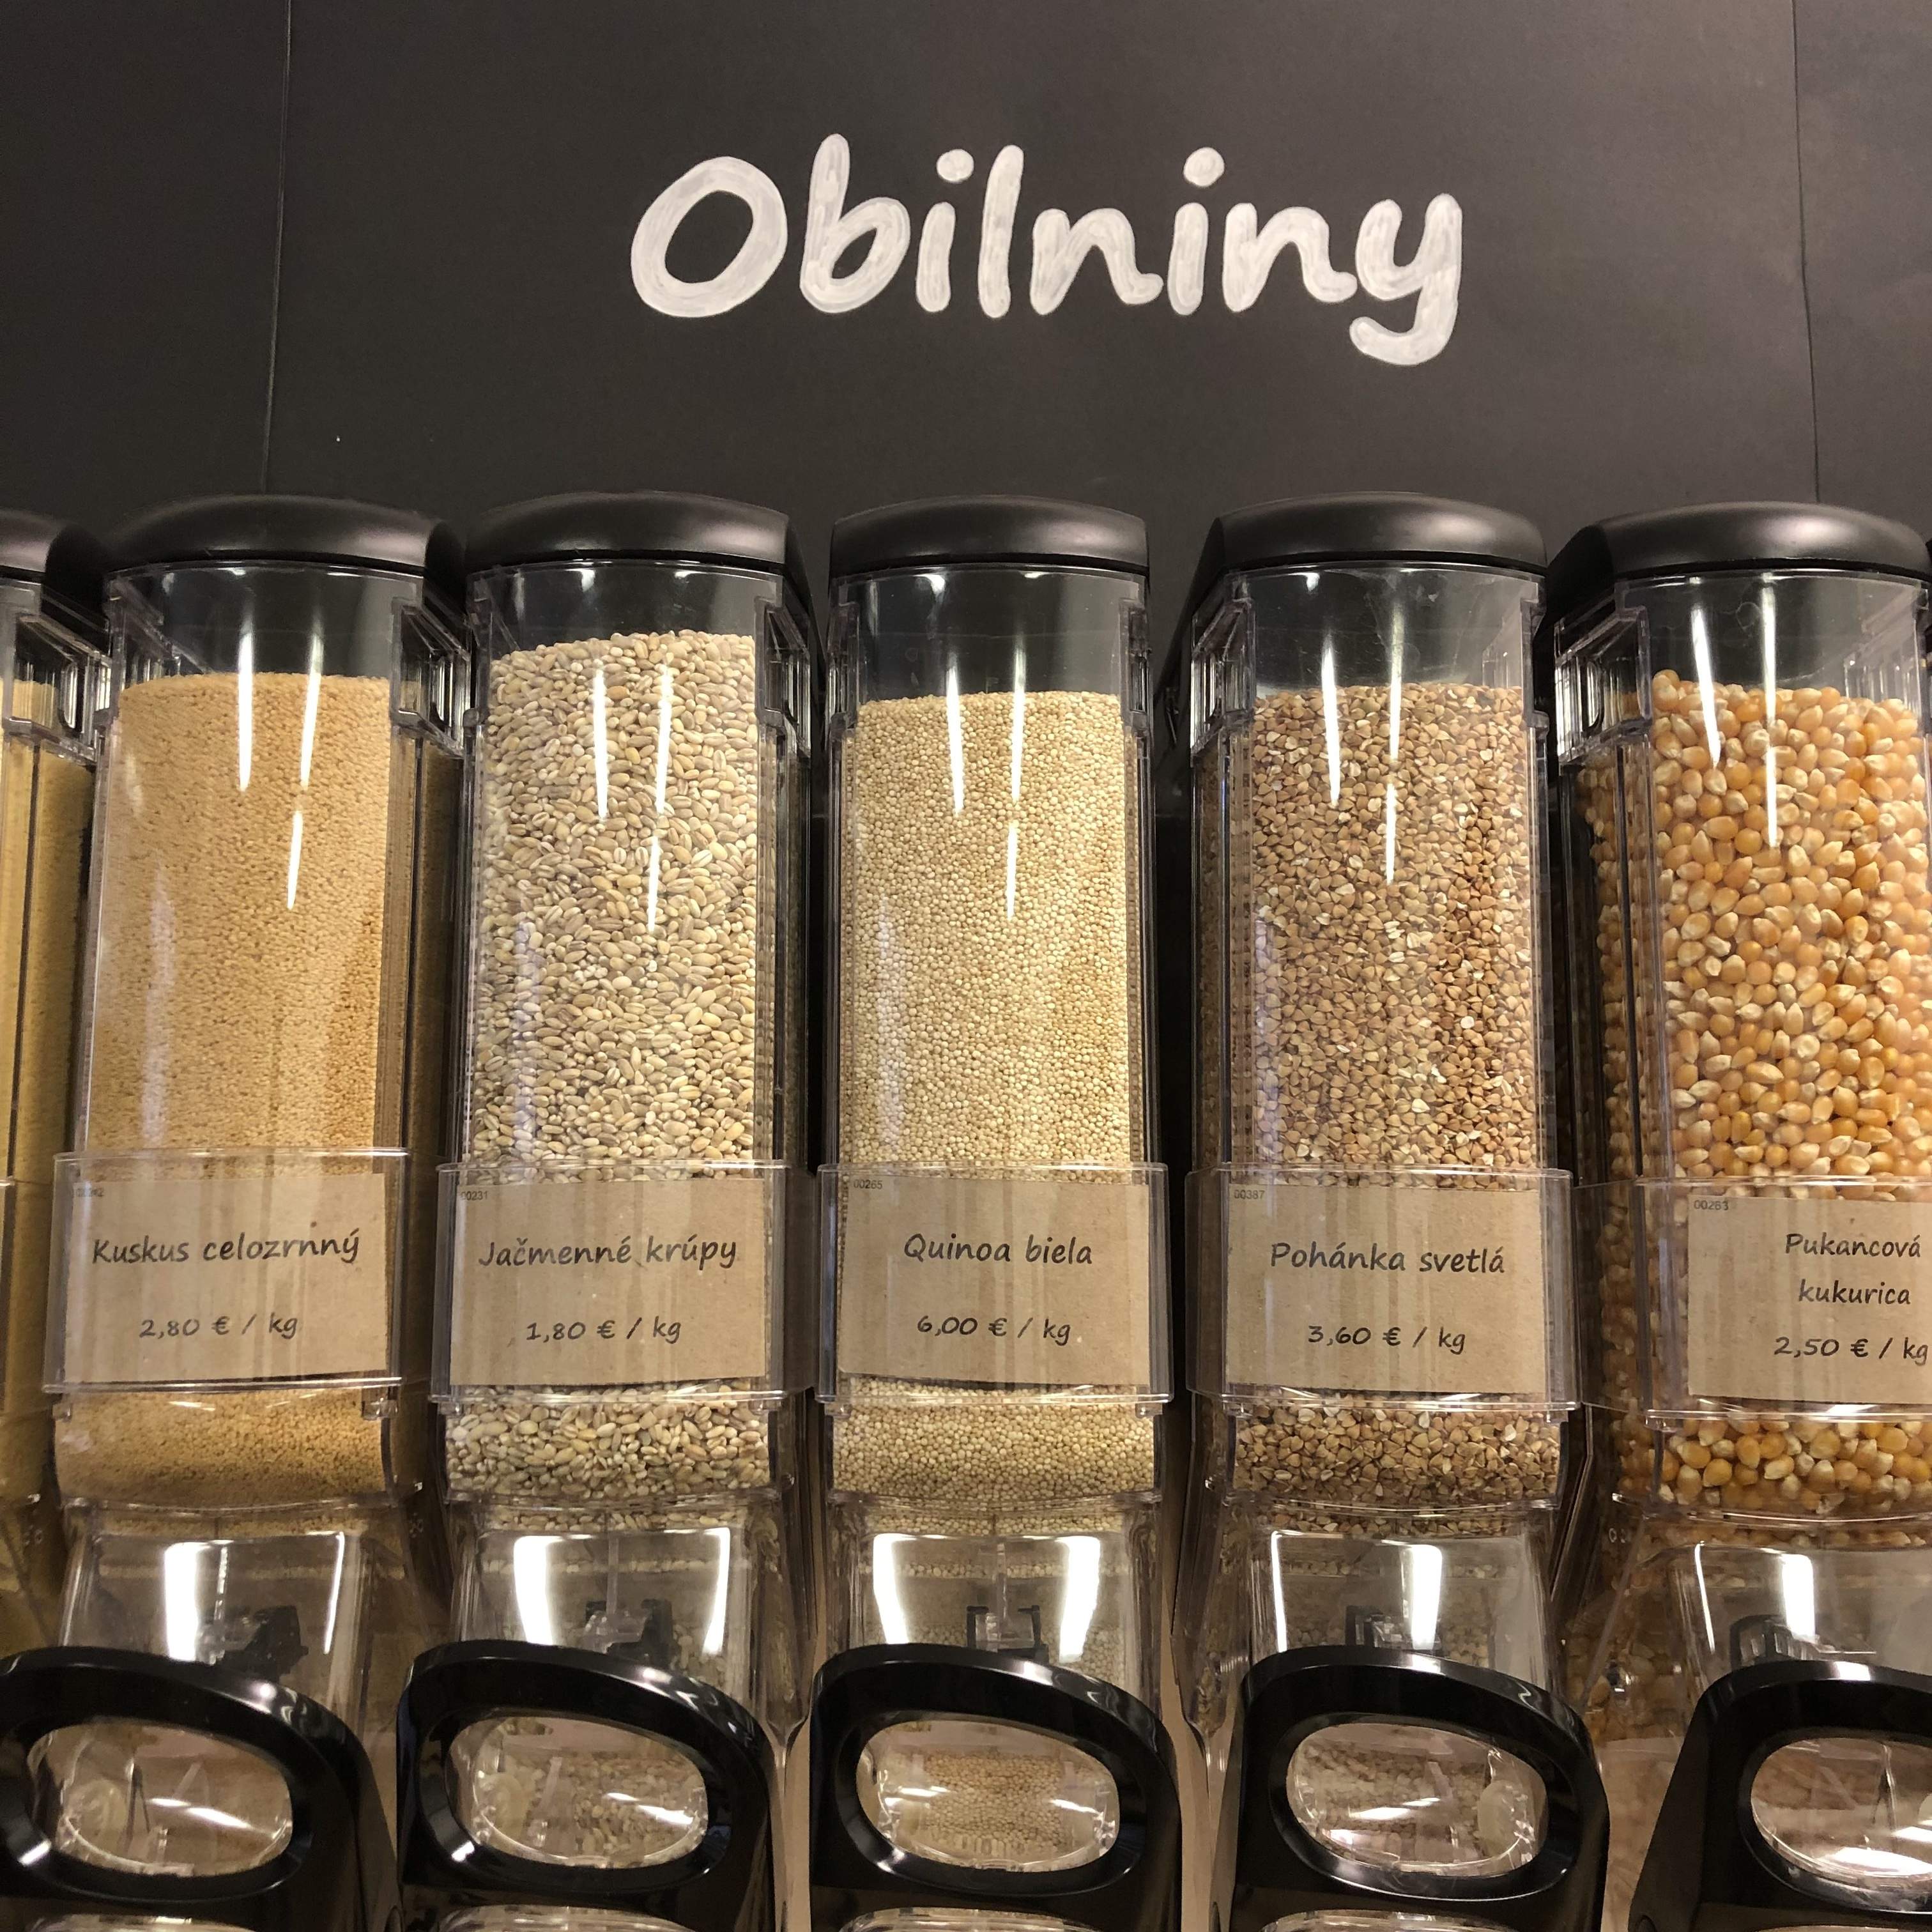 Obilniny - bulgur pšeničný